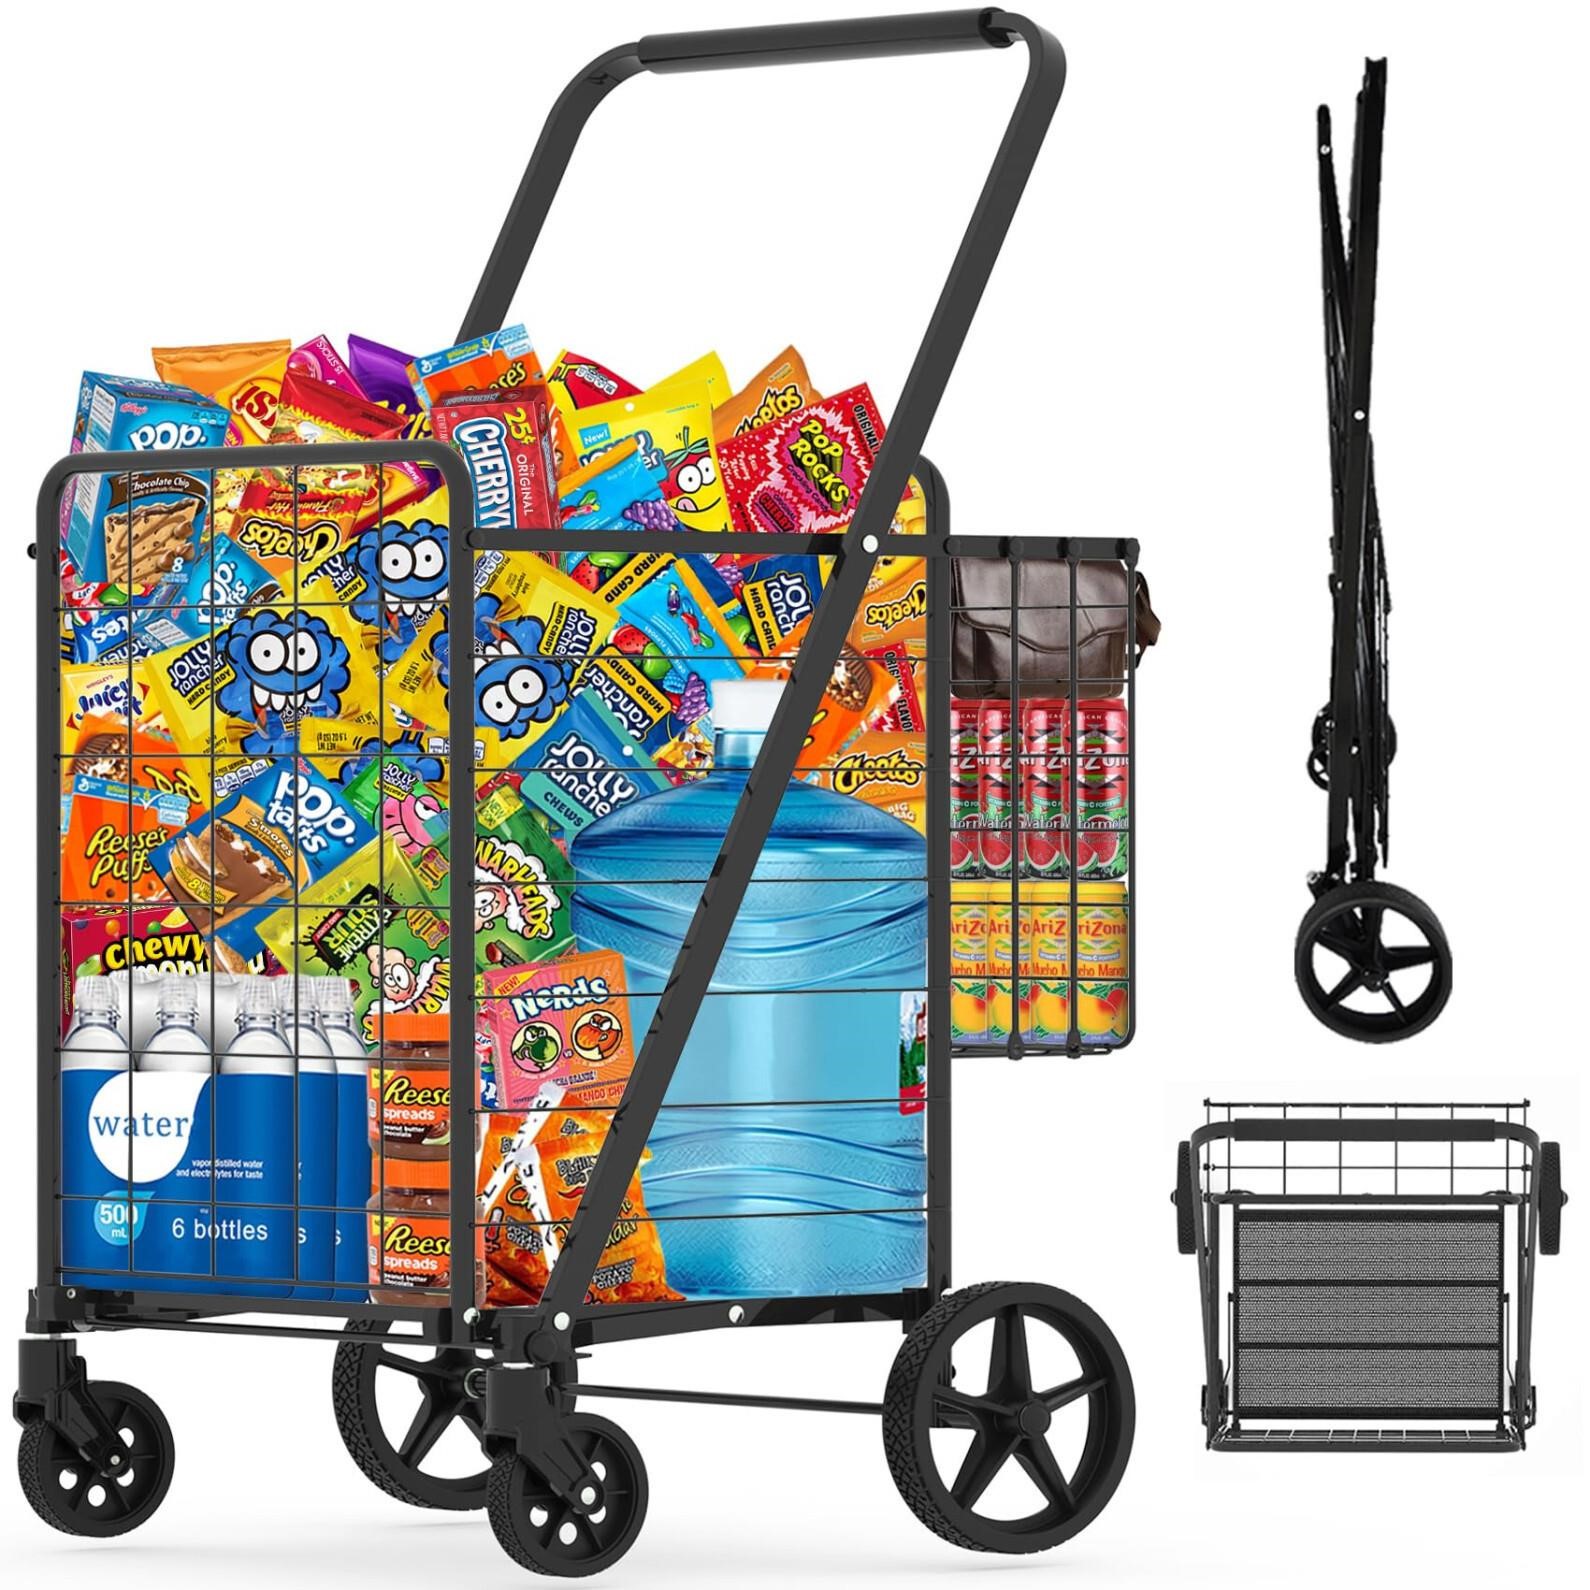 Heavy Duty Folding Shopping Cart for Groceries, Ju